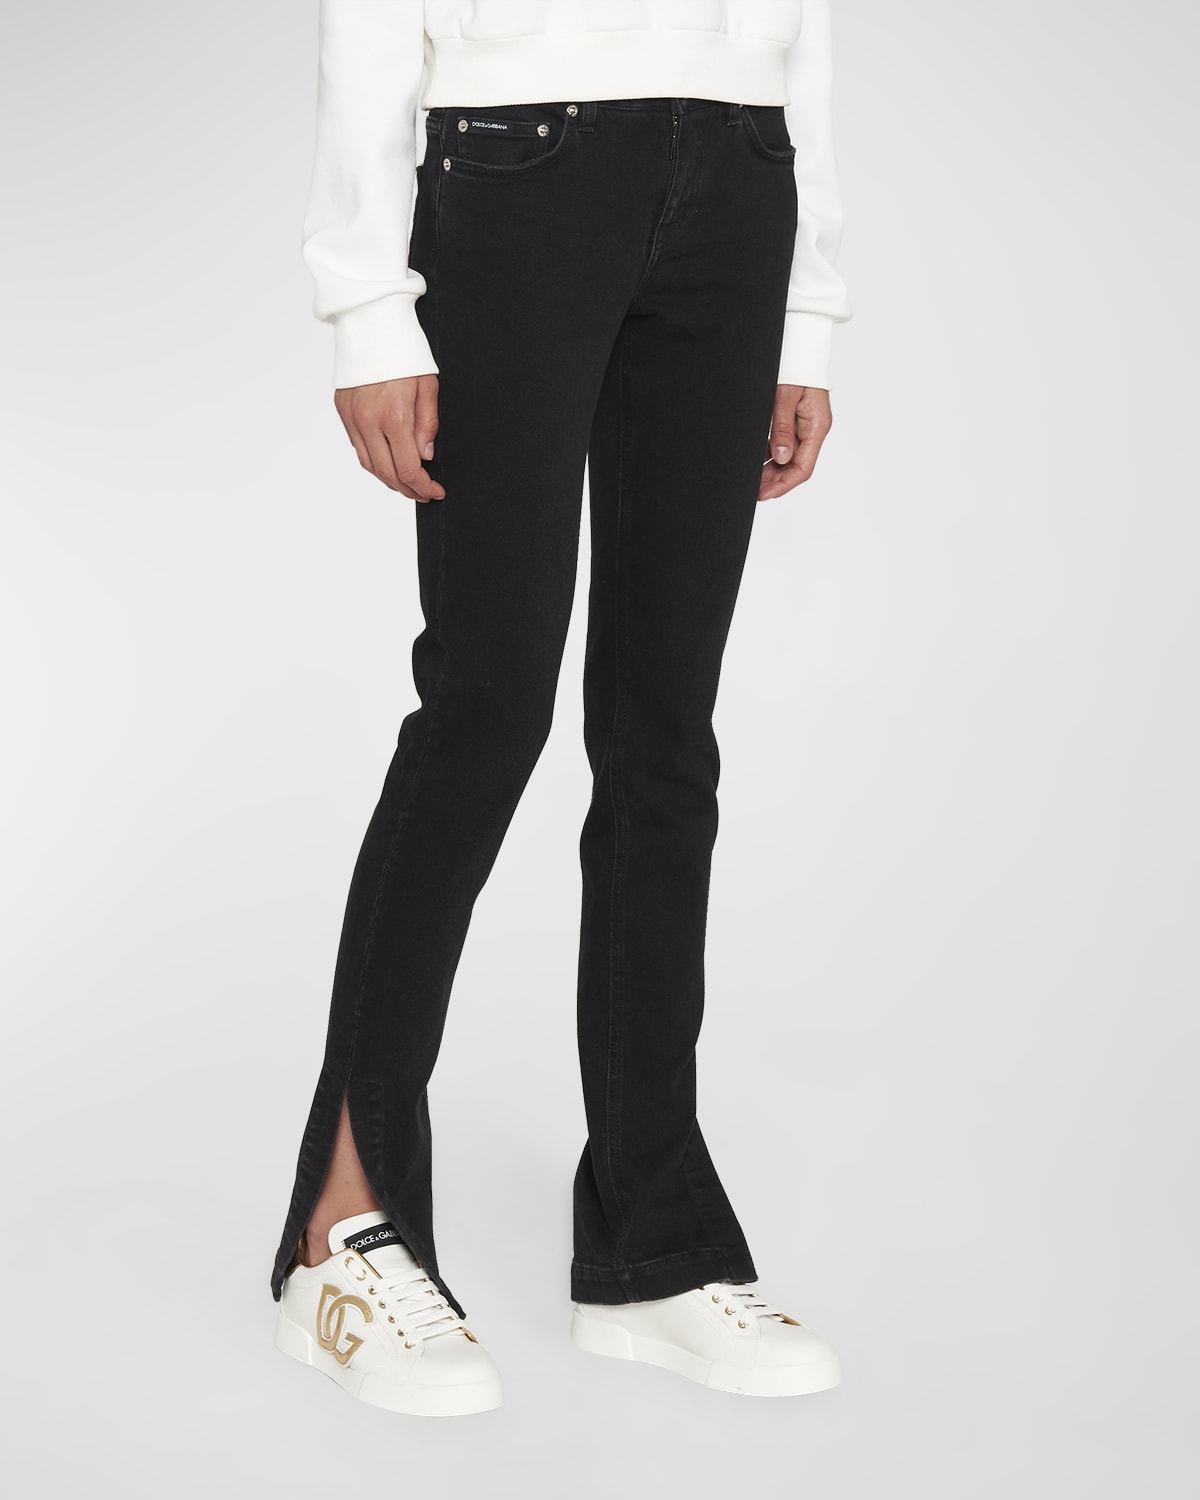 Balenciaga Skinny-Leg Zip-Hem Legging Pants | Neiman Marcus